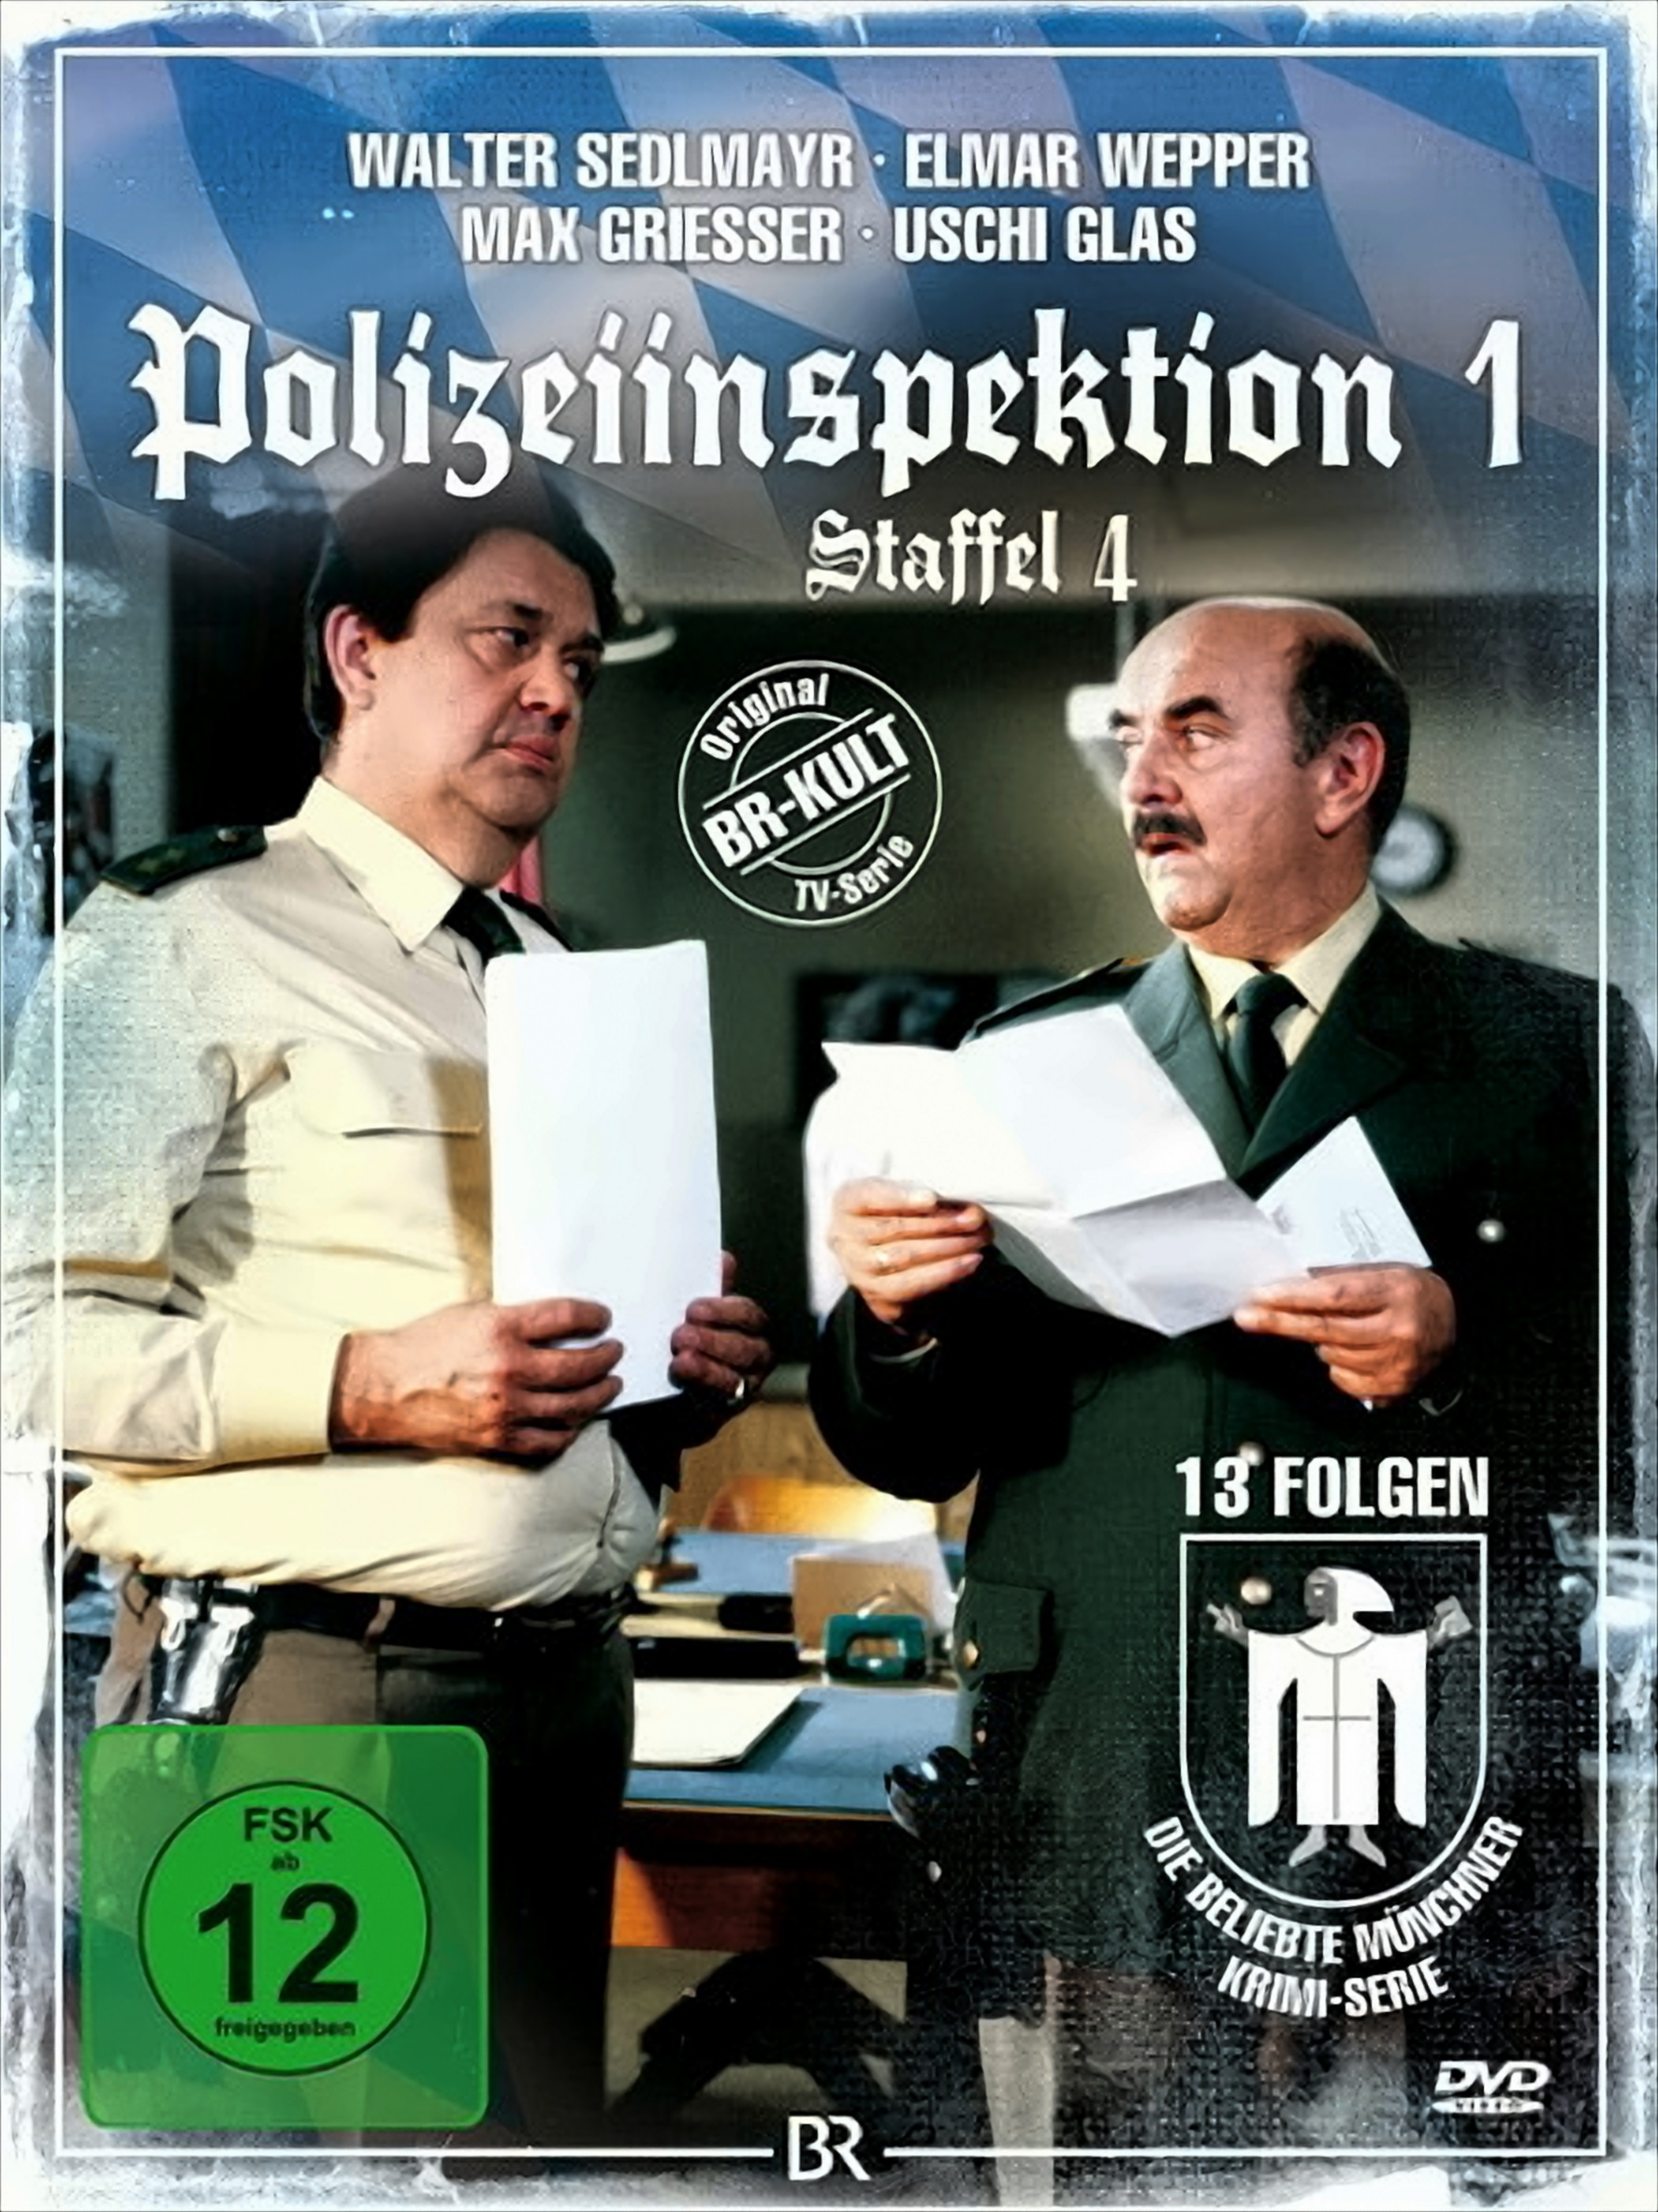 Polizeiinspektion DVD 04 - 1 Staffel